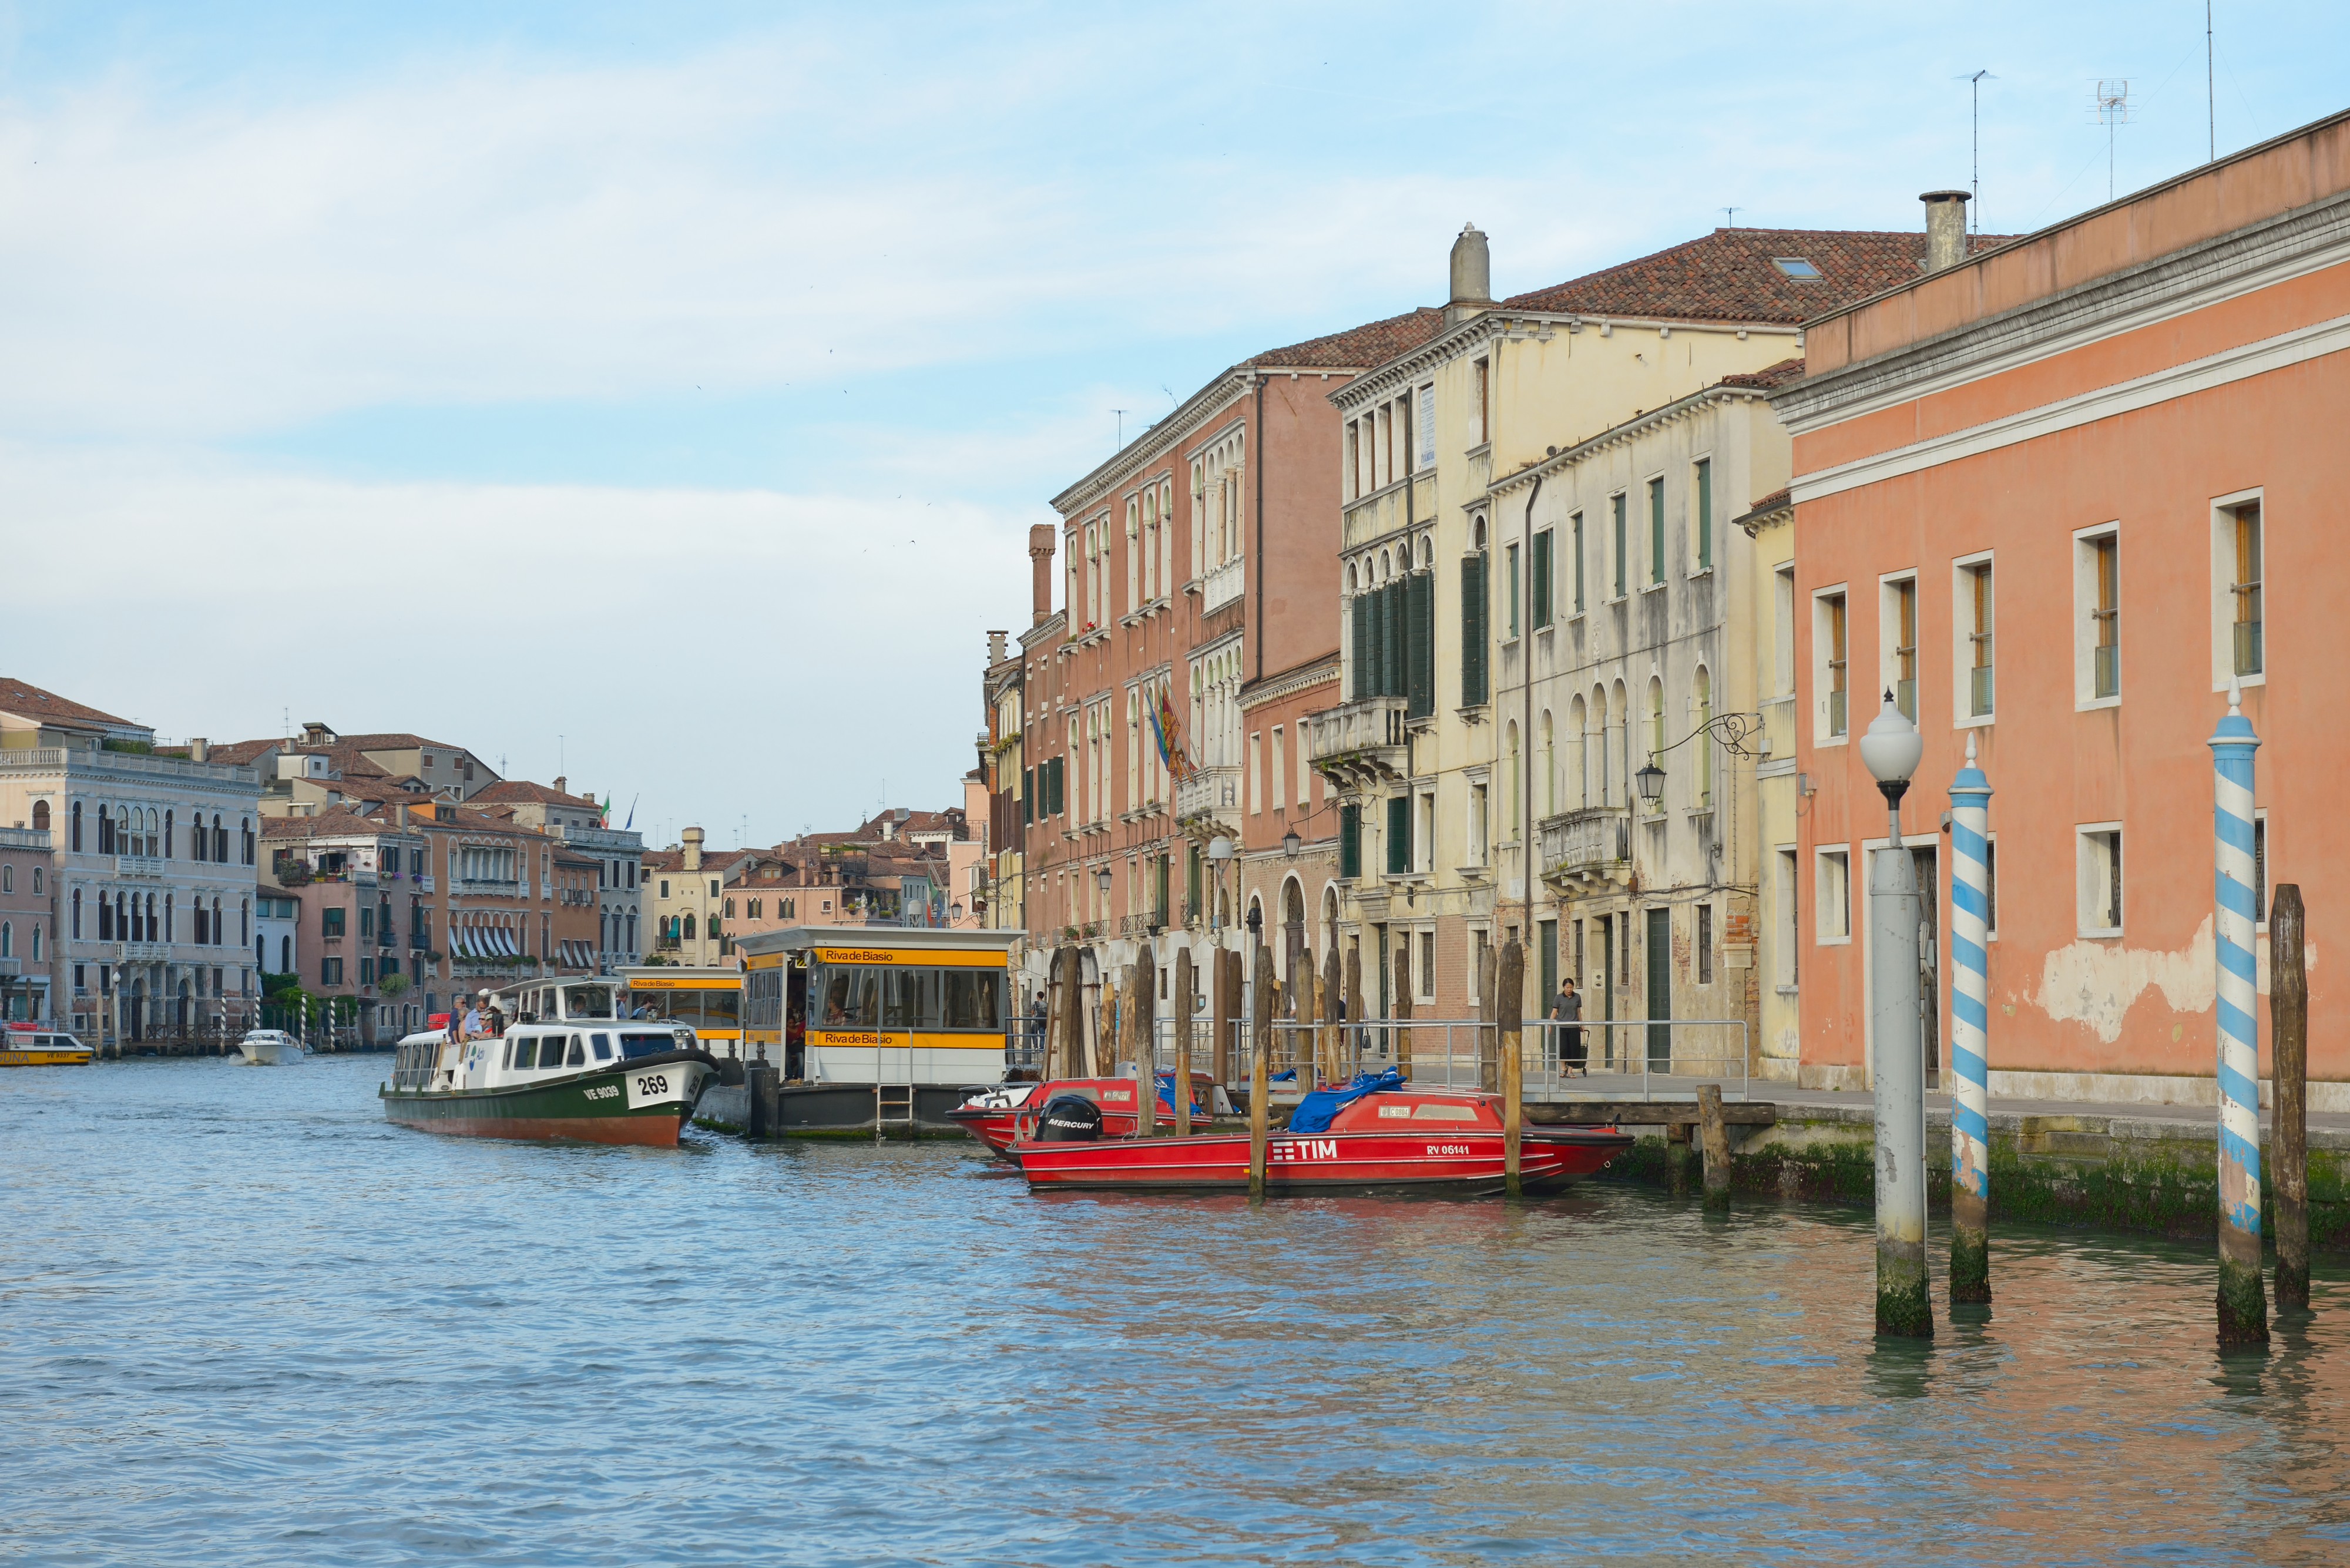 Pontile Vaporetto Riva de Biasio Canal Grande Venezia 2